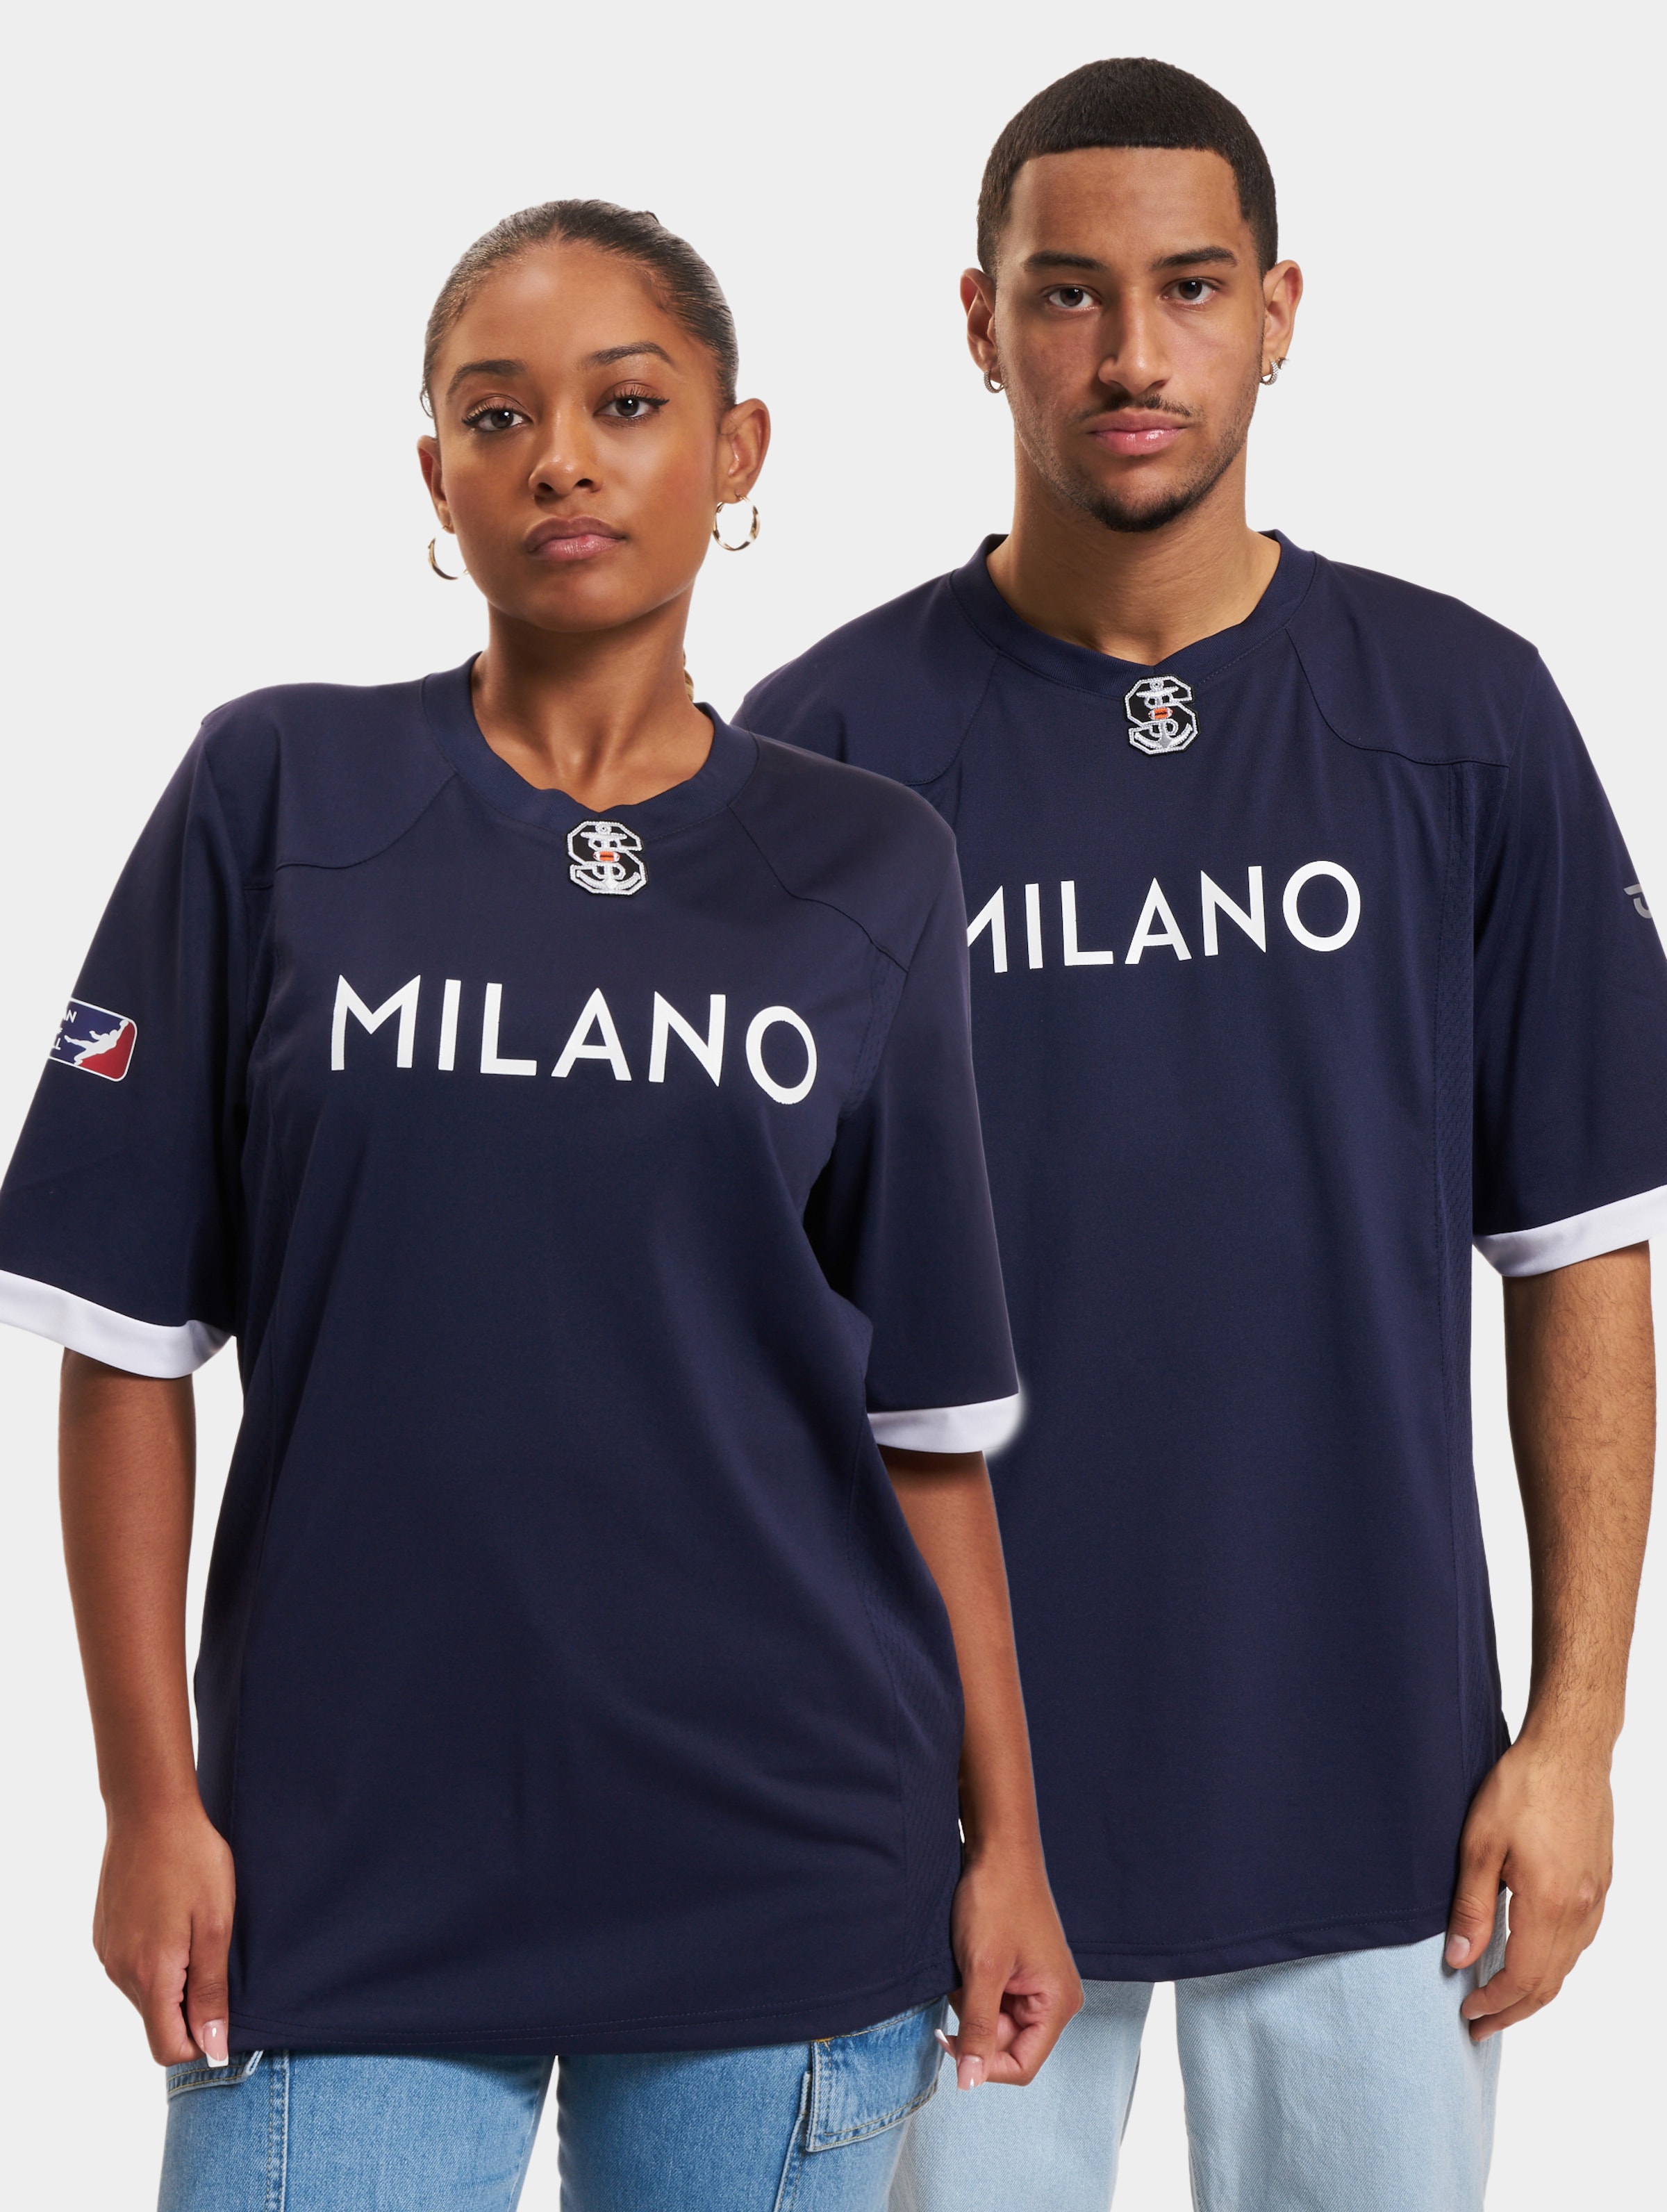 European League Of Football Milano Seamen Authentic Game Trikot Vrouwen op kleur blauw, Maat S